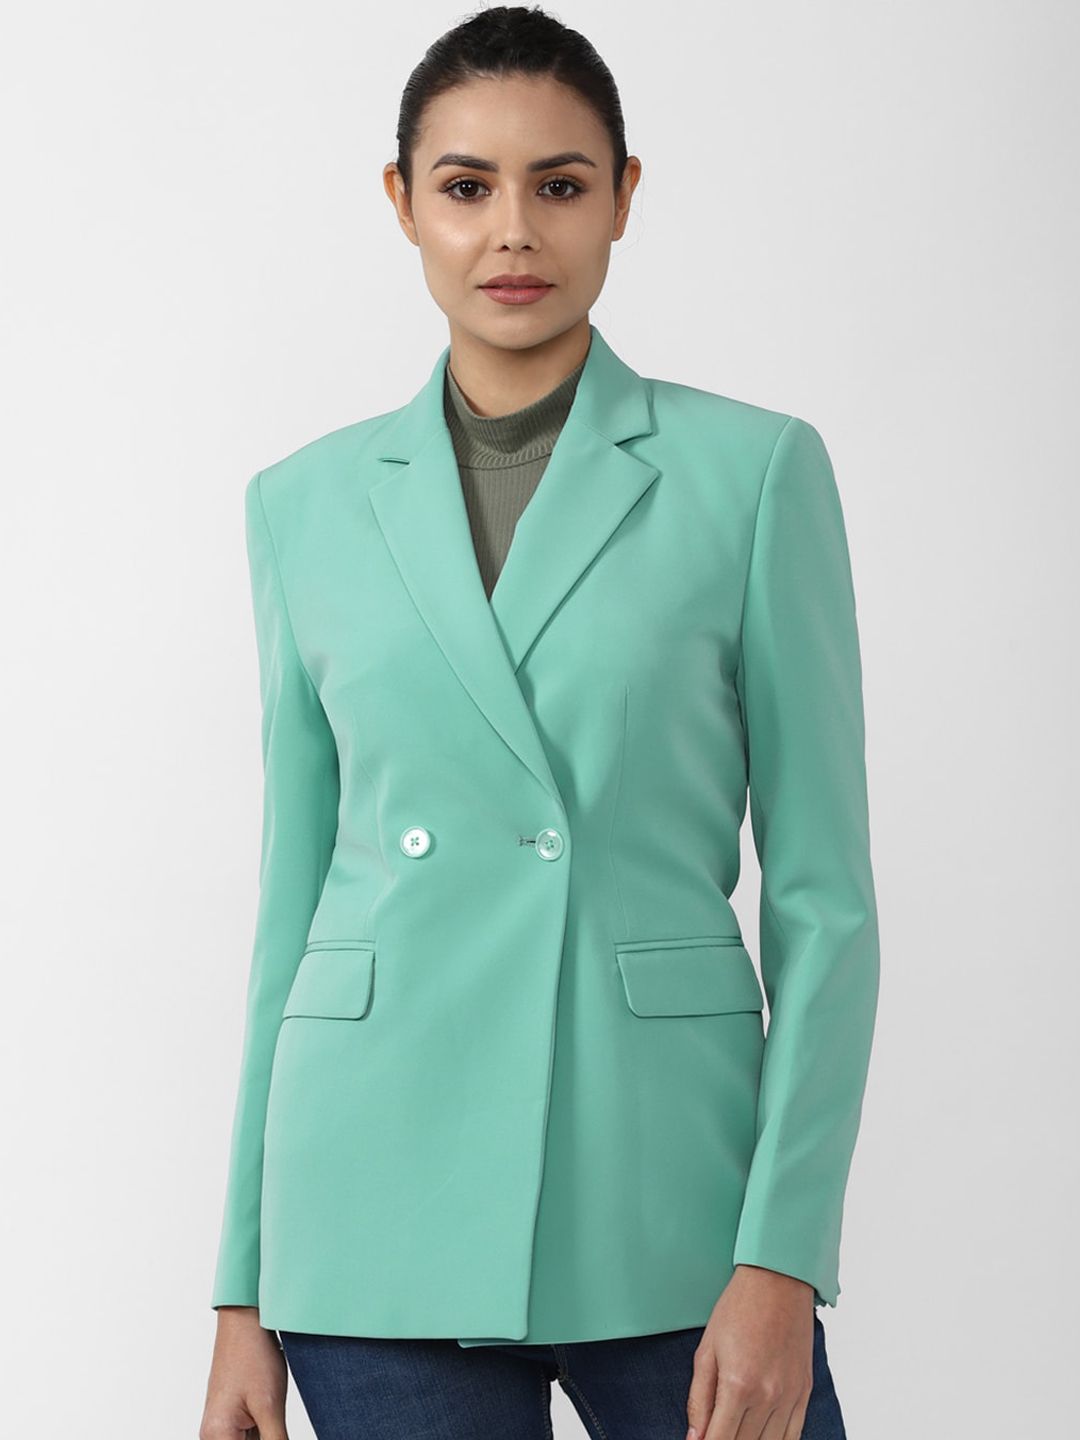 Van Heusen Woman Women Green Solid Double Breasted Blazers Price in India